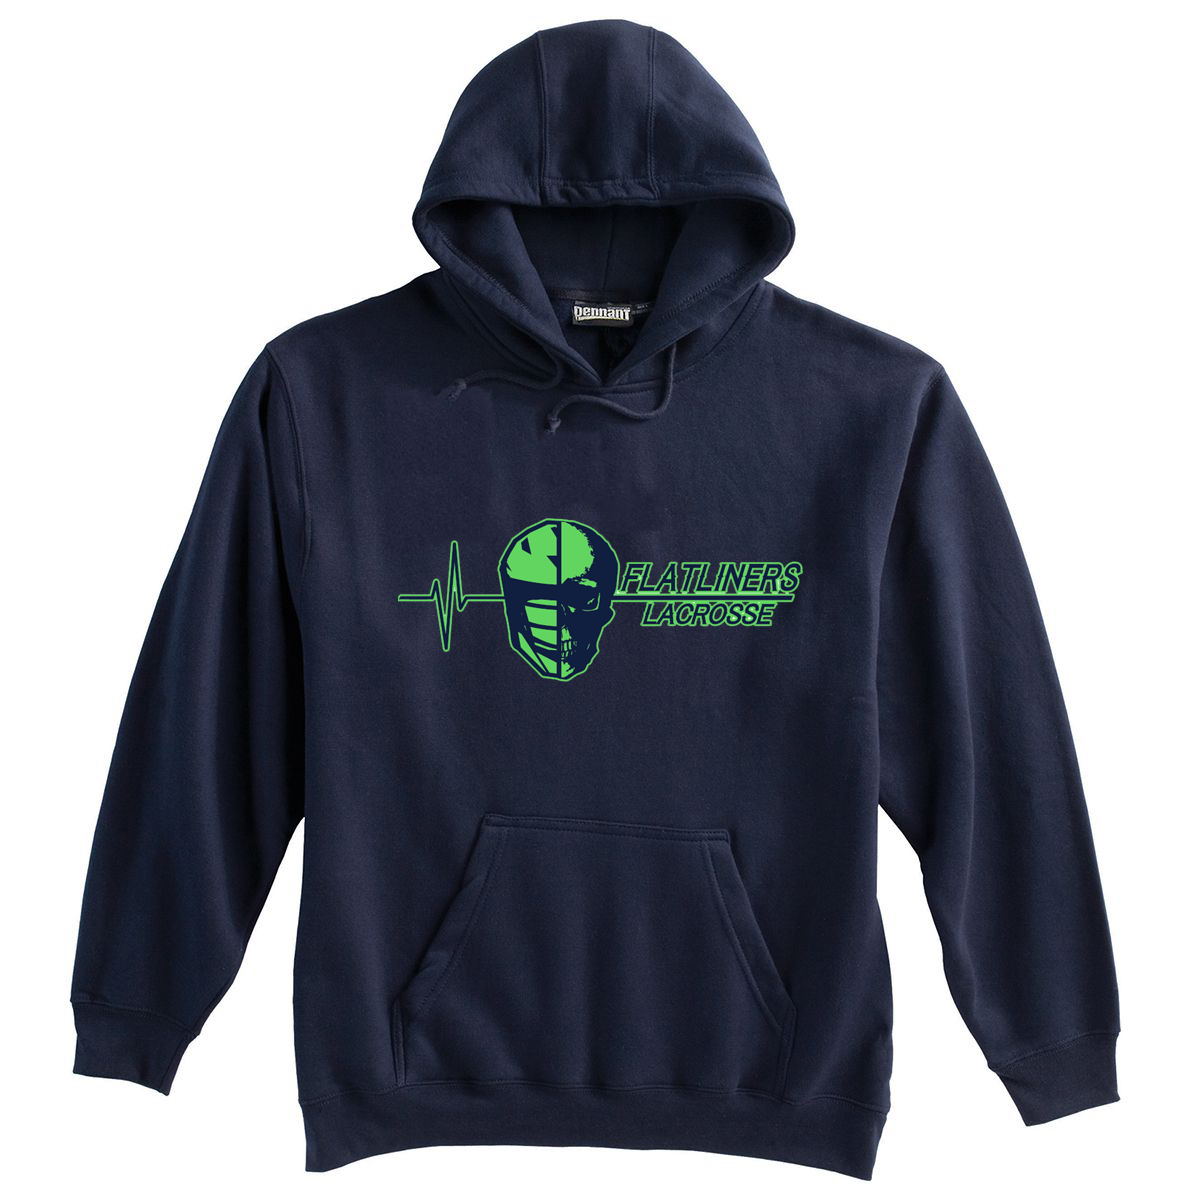 Flatliners Lacrosse Navy Sweatshirt